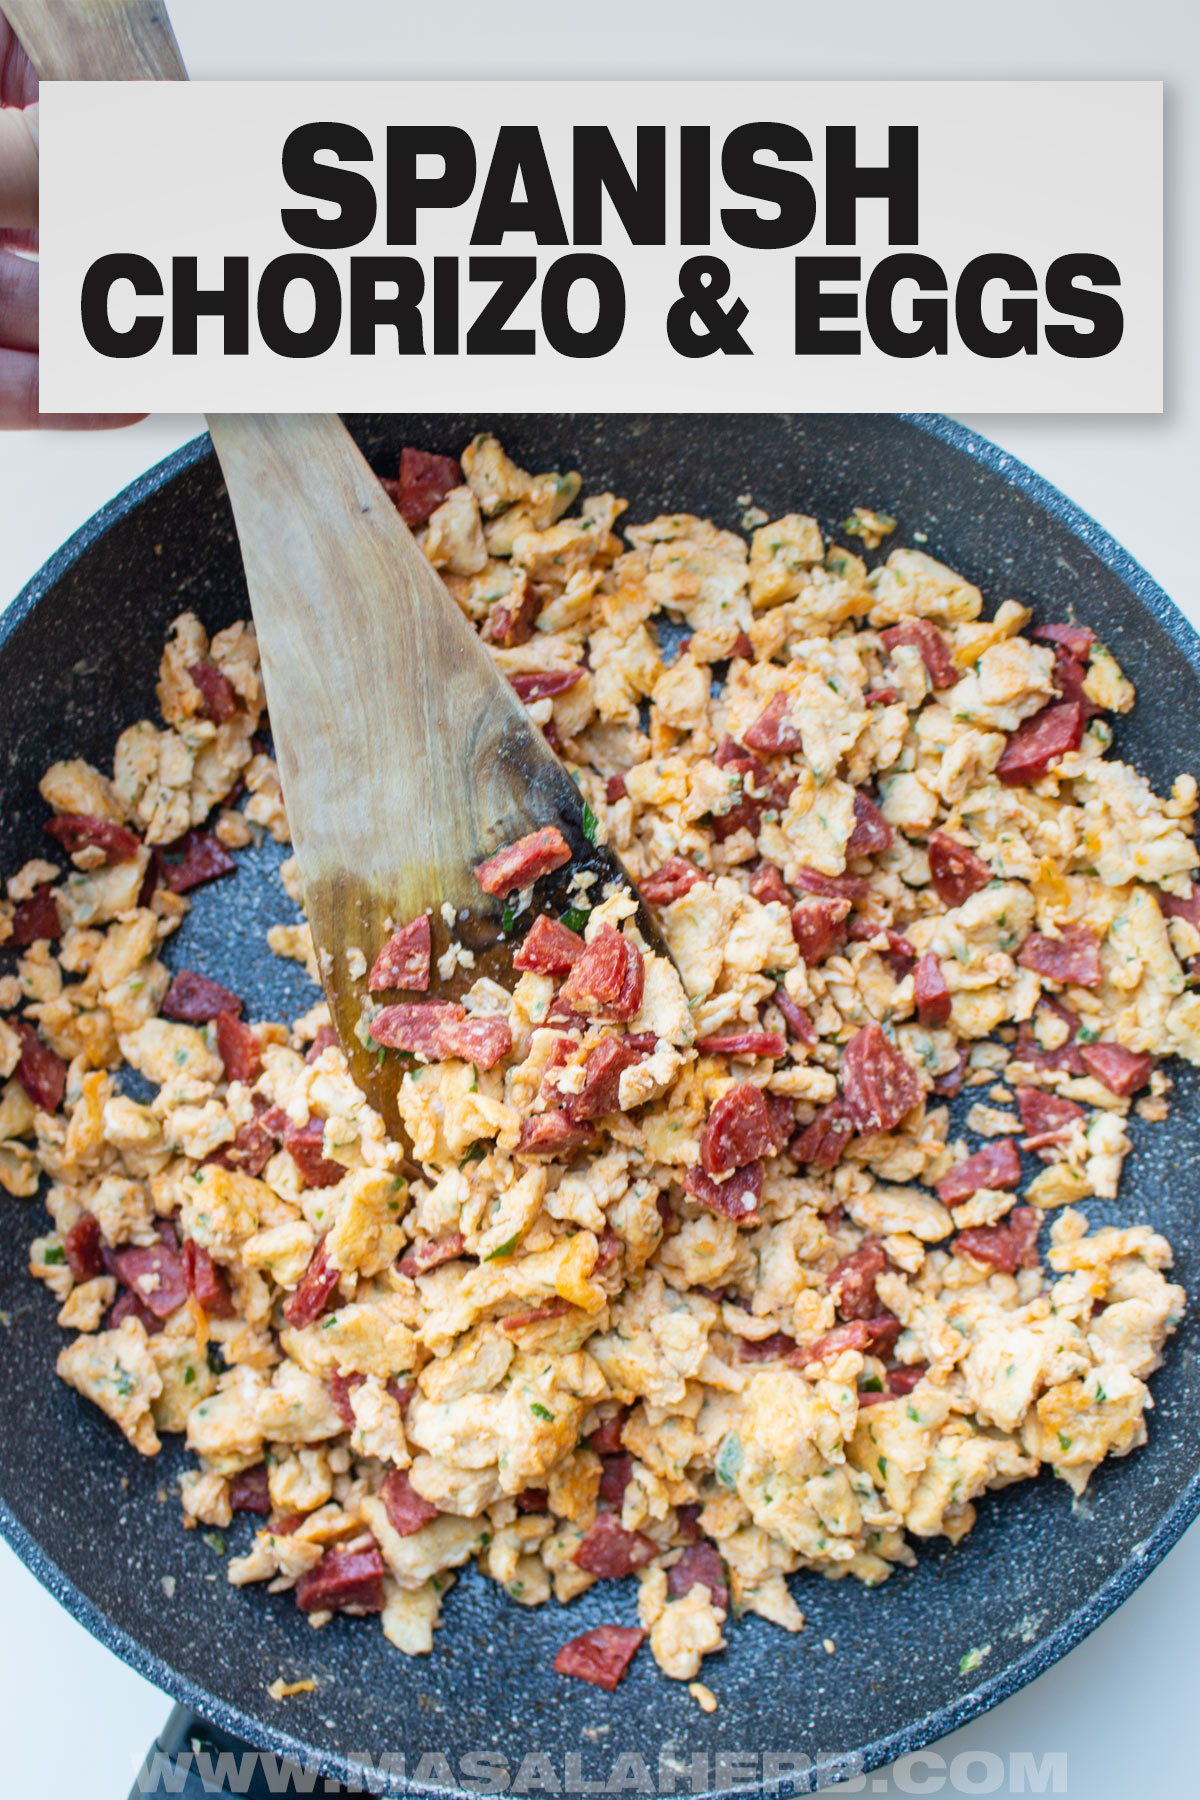 Spanish Pork Chorizo and Eggs Recipe cover image